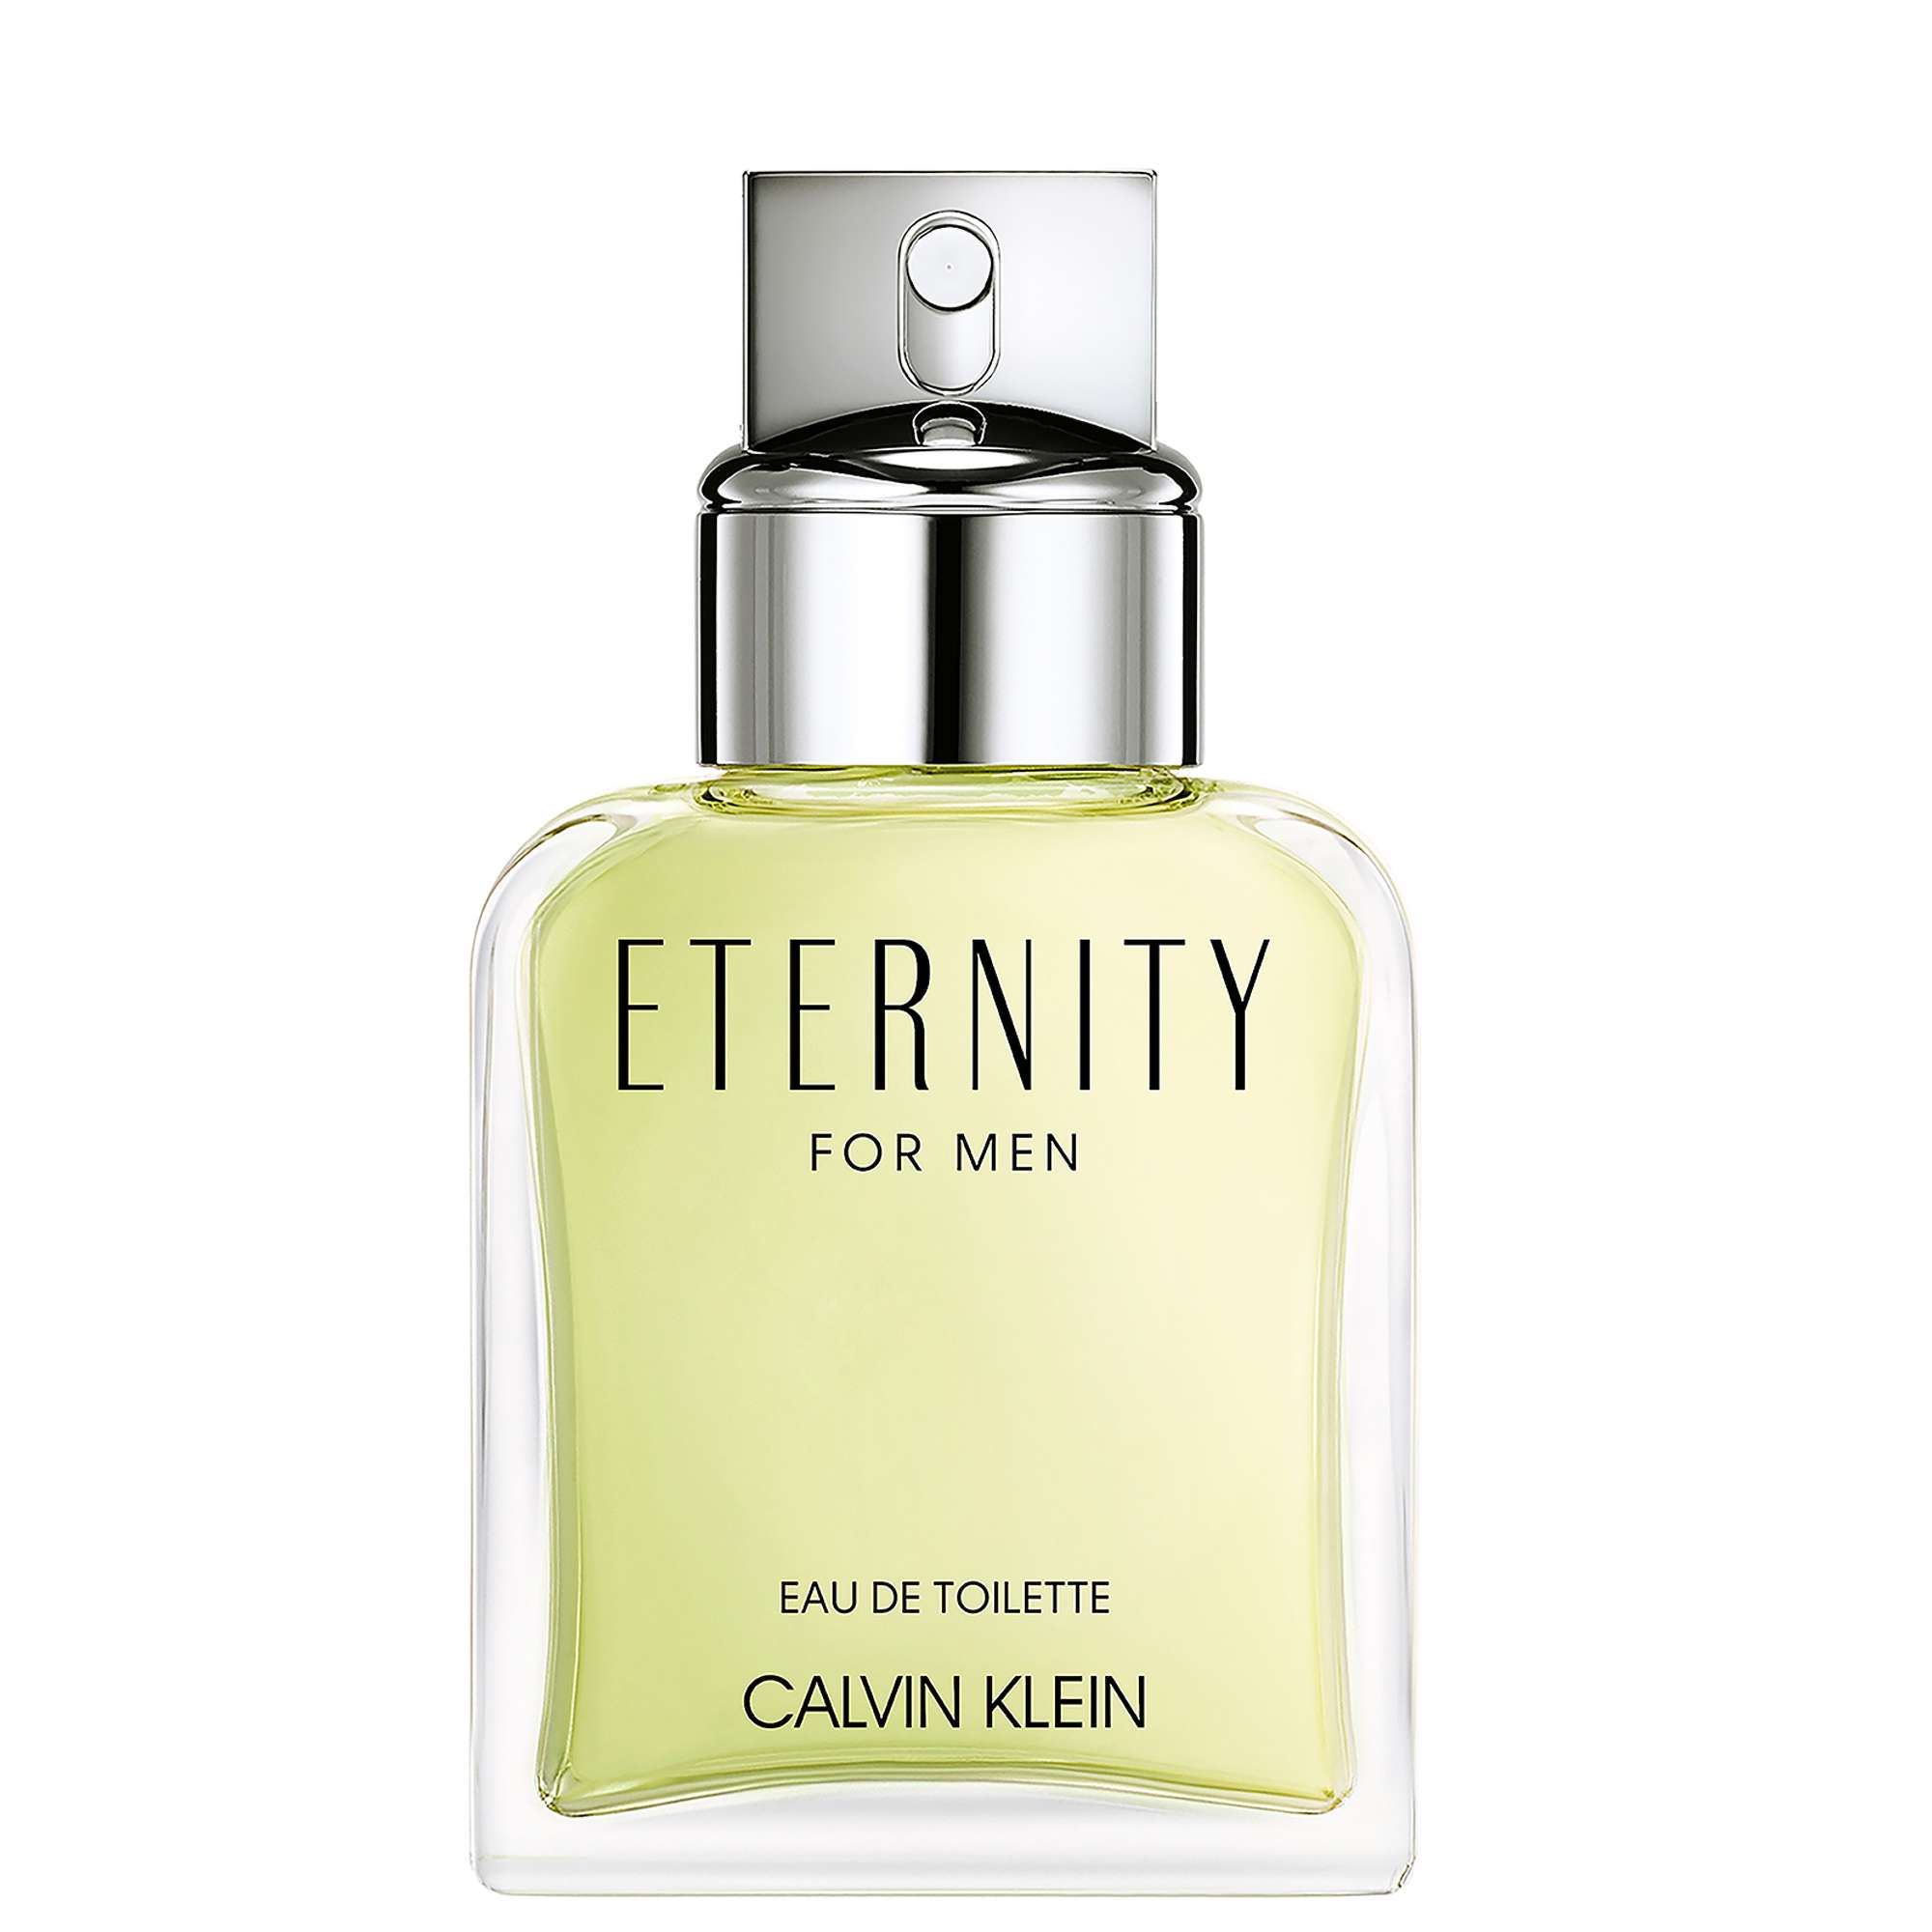 Photos - Men's Fragrance Calvin Klein Eternity For Men Eau de Toilette 50ml 